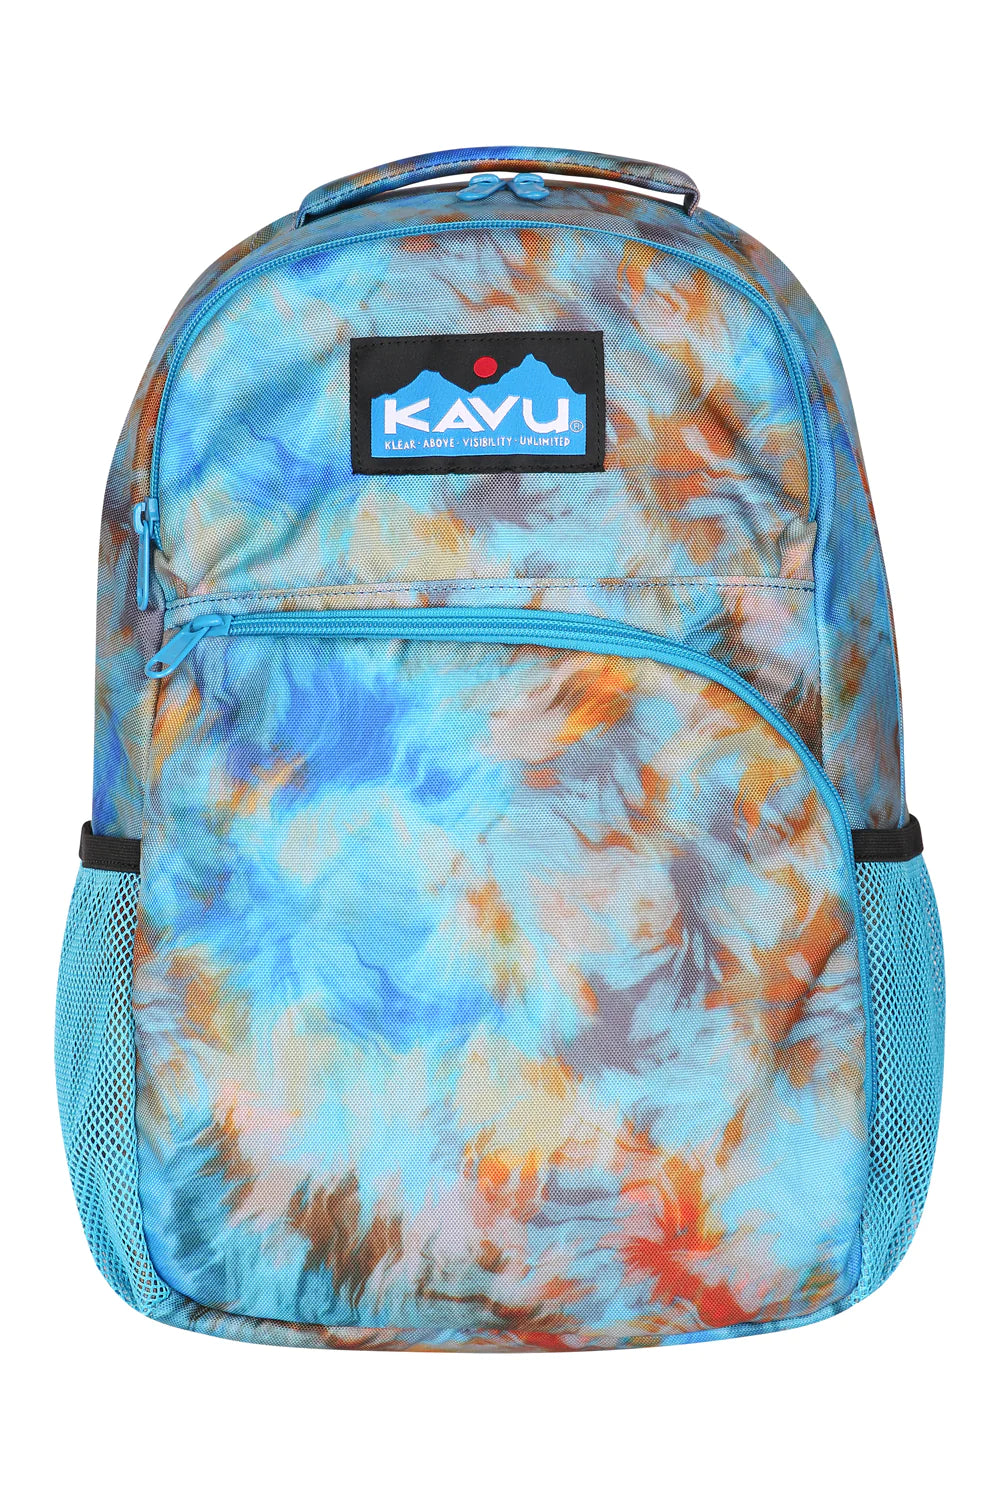 Kavu - Backpack Packwood Ocean Potion